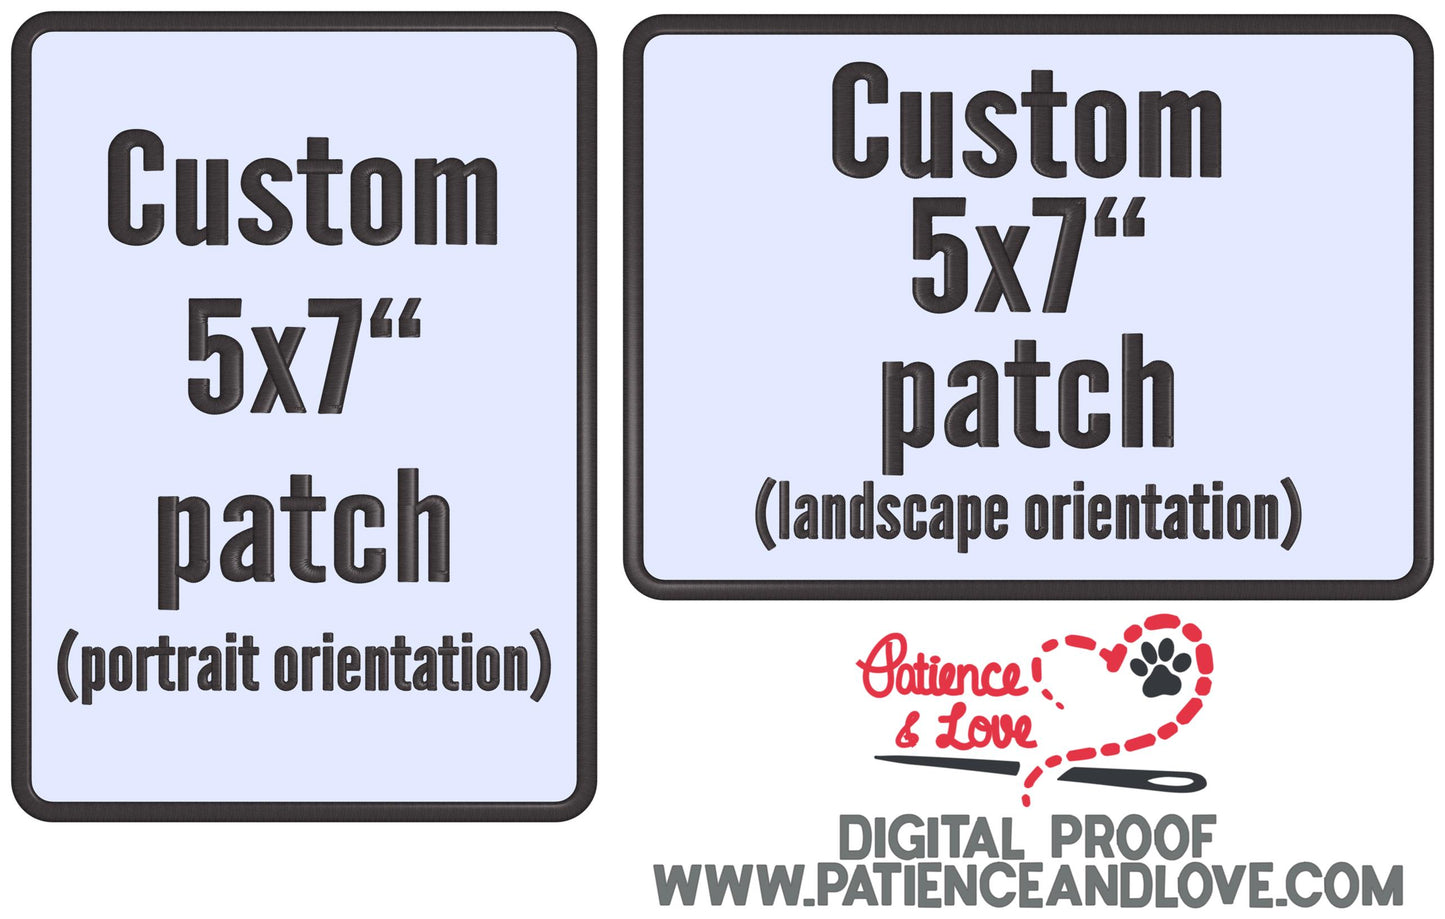 5x7" Custom Patch, 5x7 inch rectangular patch